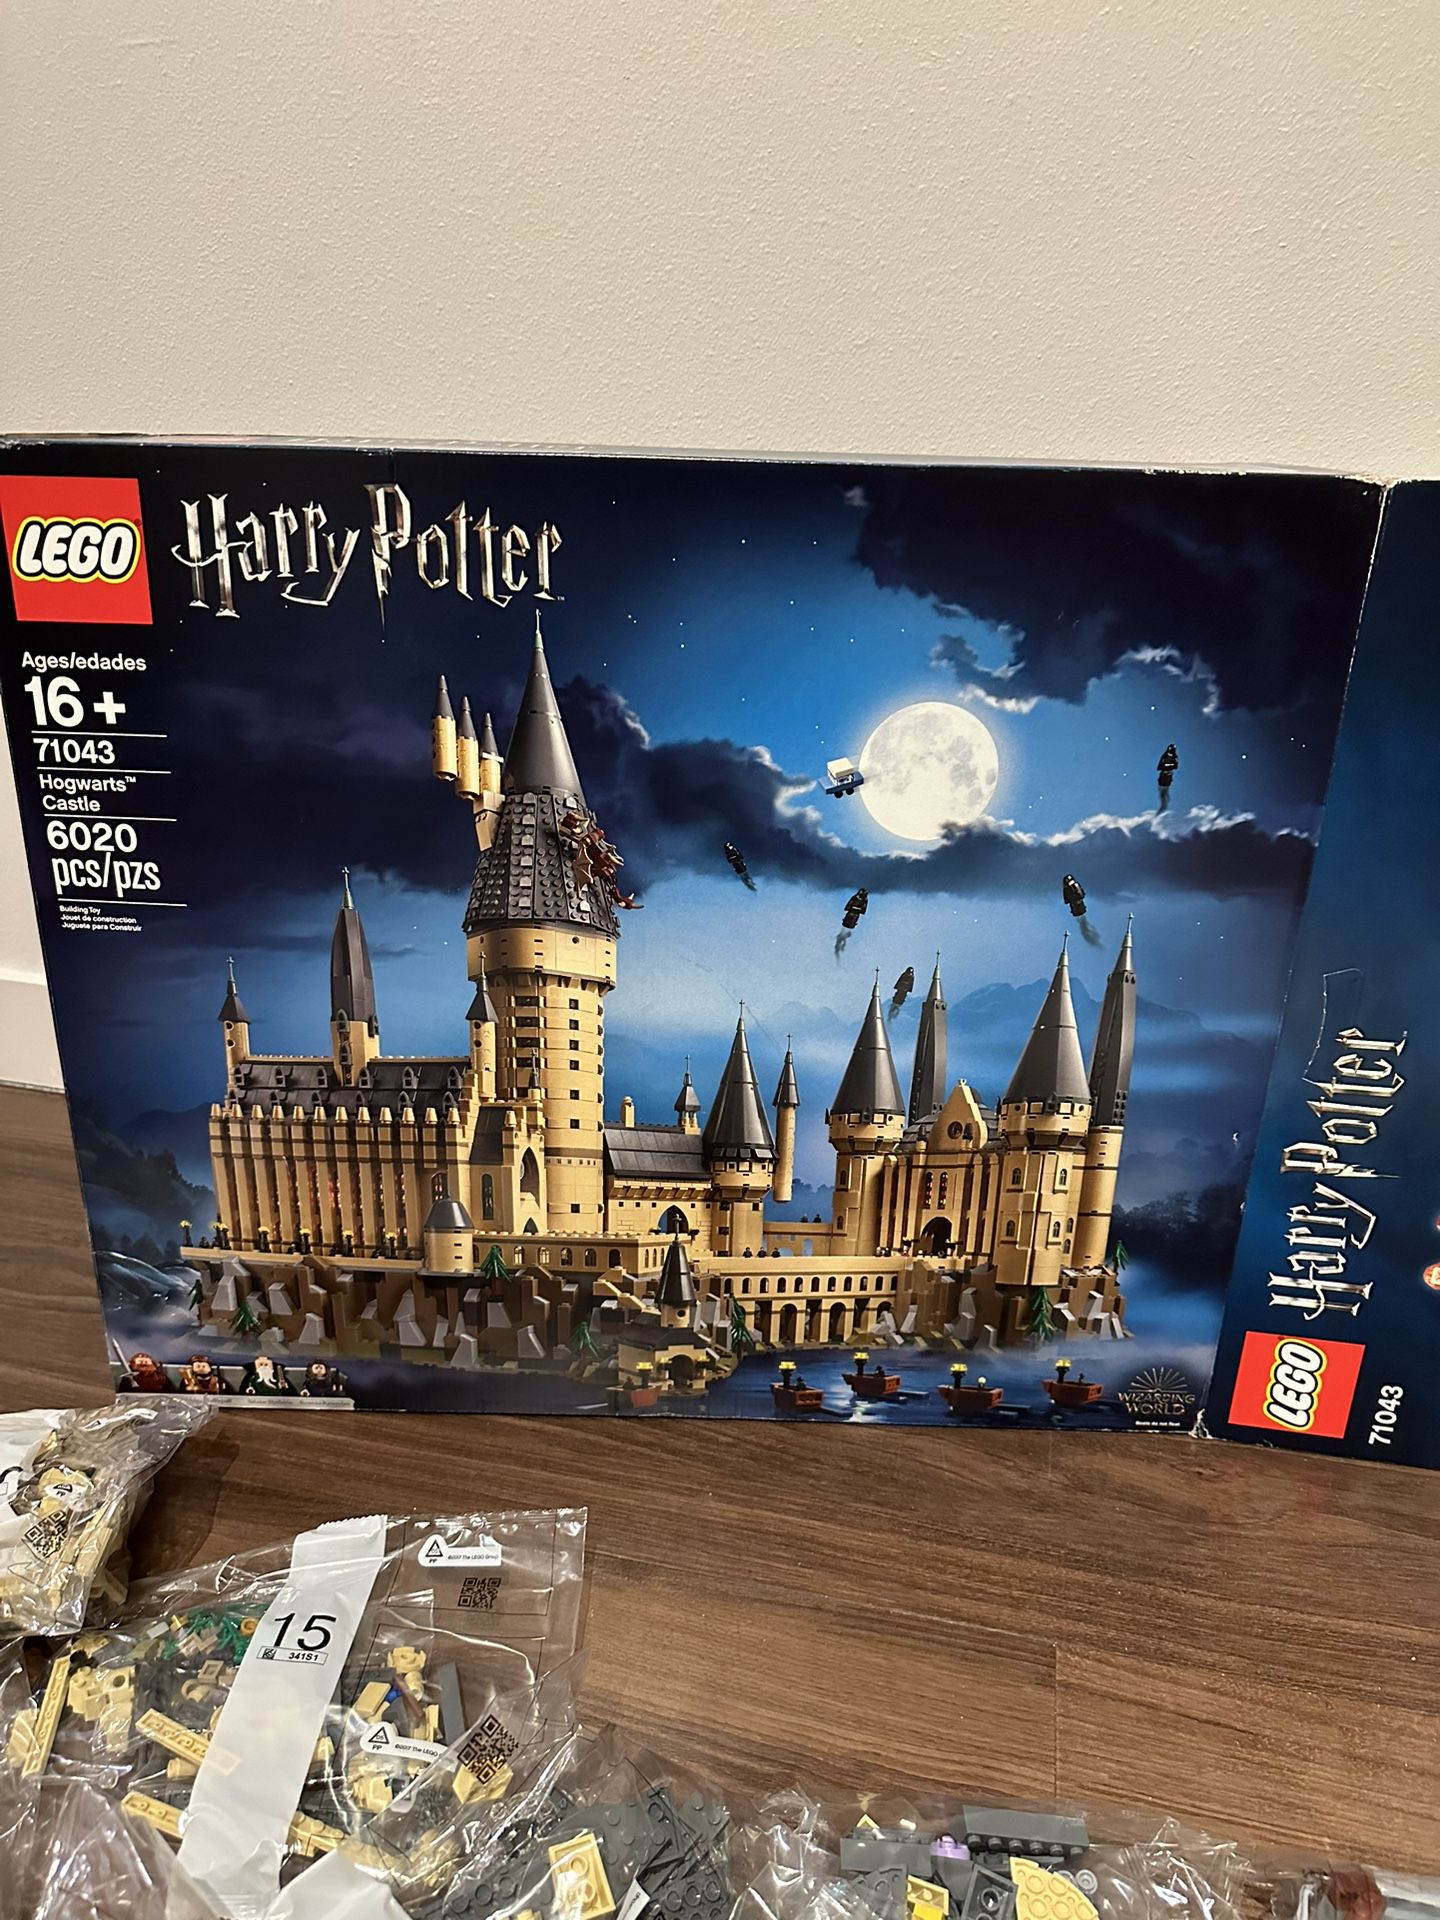 LEGO Harry Potter Hogwarts Castle Set #71043 - New, Open Box, Over 6,000 Pieces